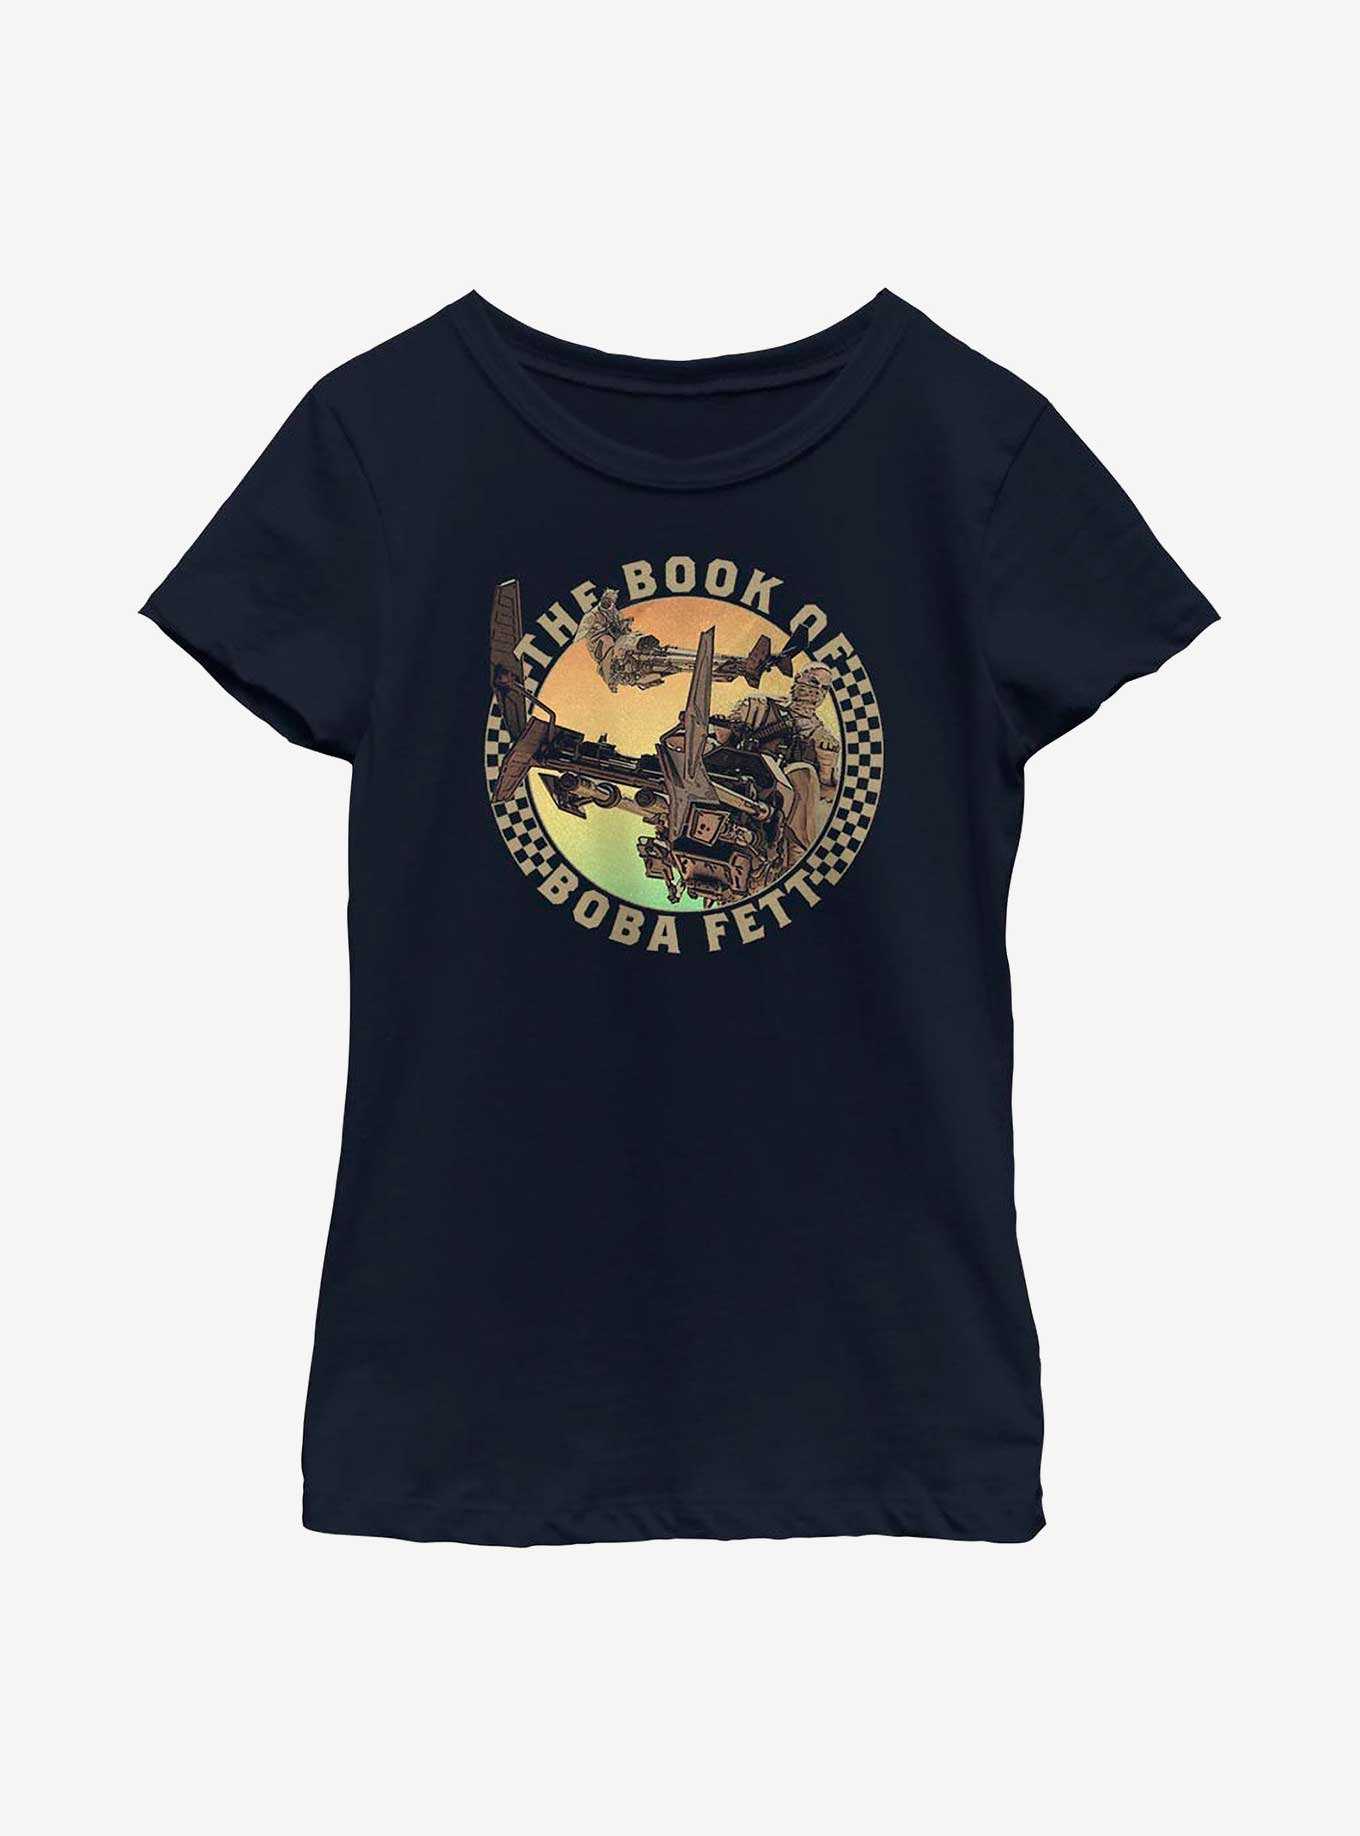 Star Wars Book Of Boba Fett Tusken Raider Speeder Bike Youth Girls T-Shirt, , hi-res